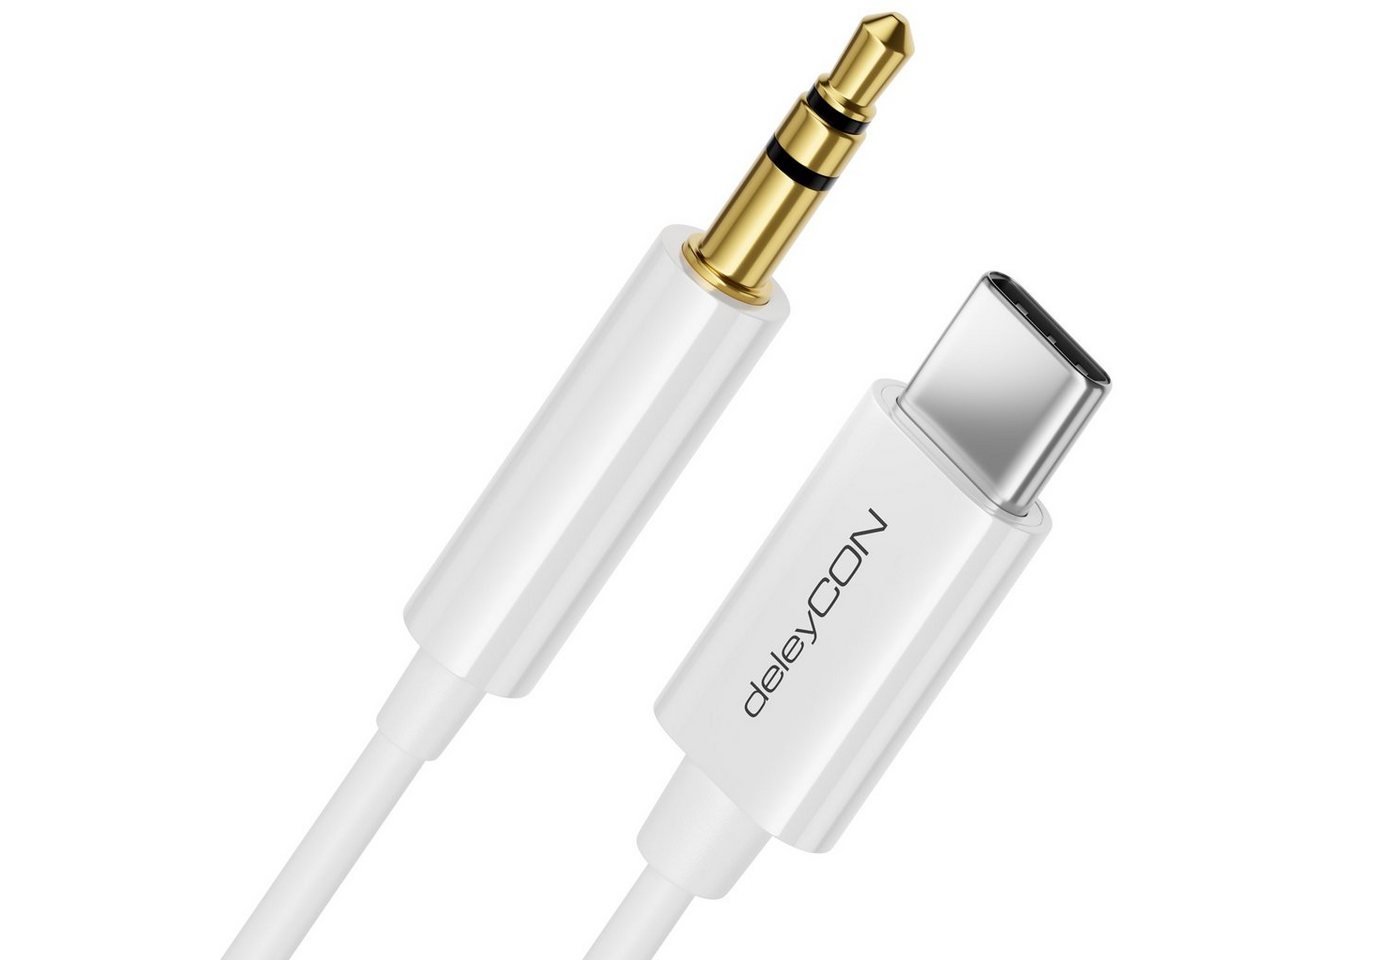 deleyCON deleyCON 1m 3,5mm Klinke auf USB-C Kabel AUX 3,5mm Klinkenkabel Audio USB-Kabel von deleyCON